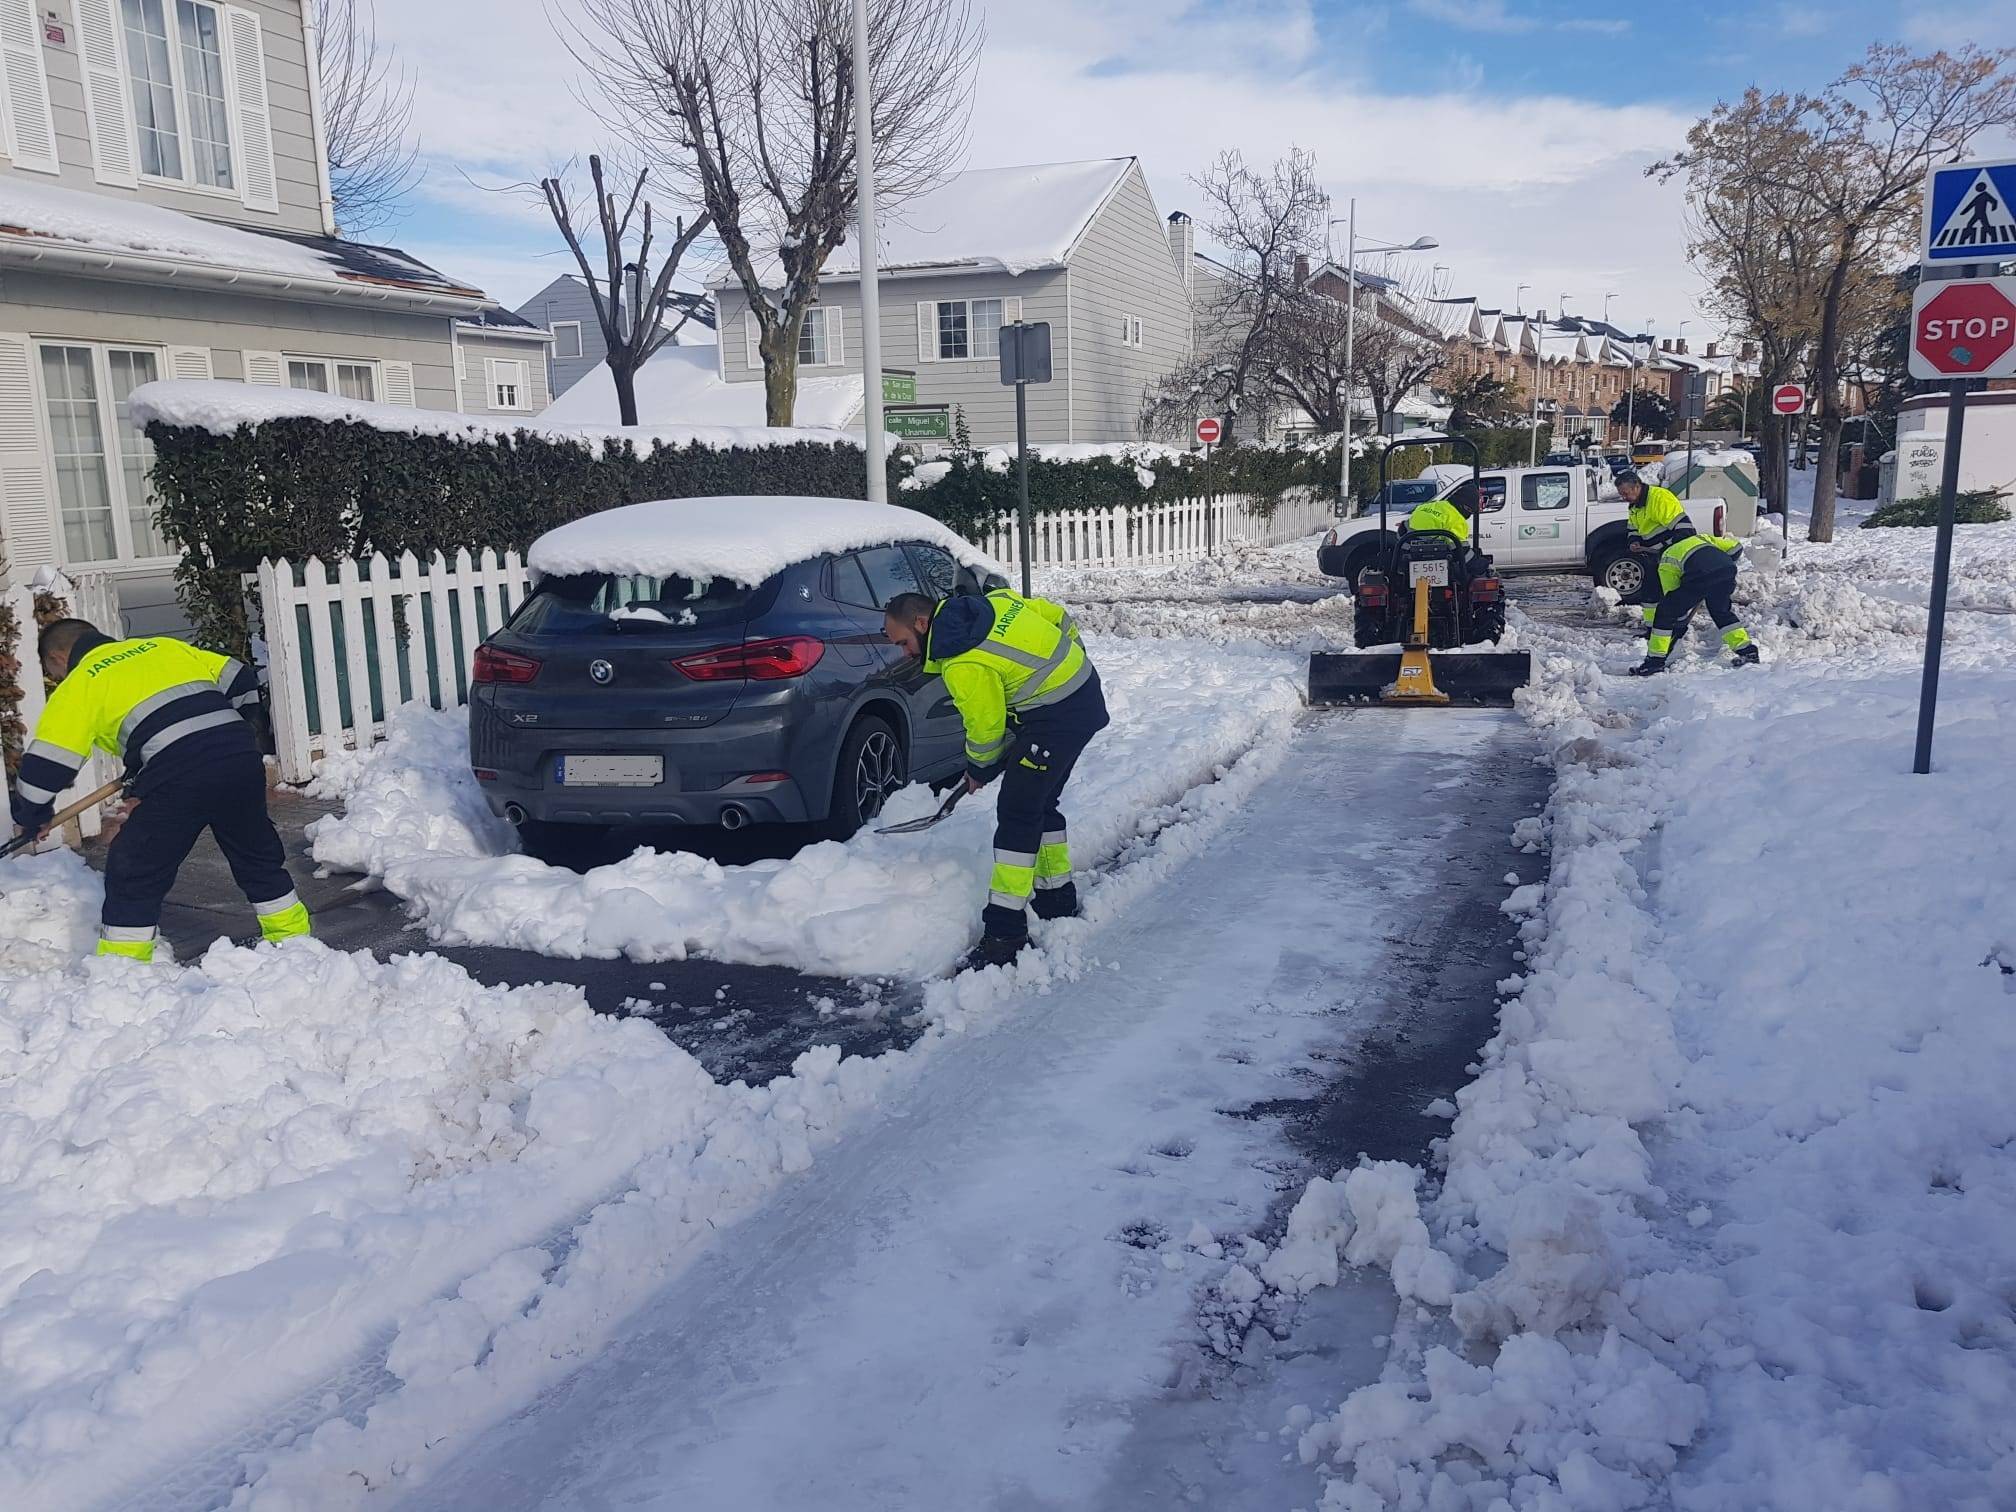 Operarios municipales retirando nieve de las calles.